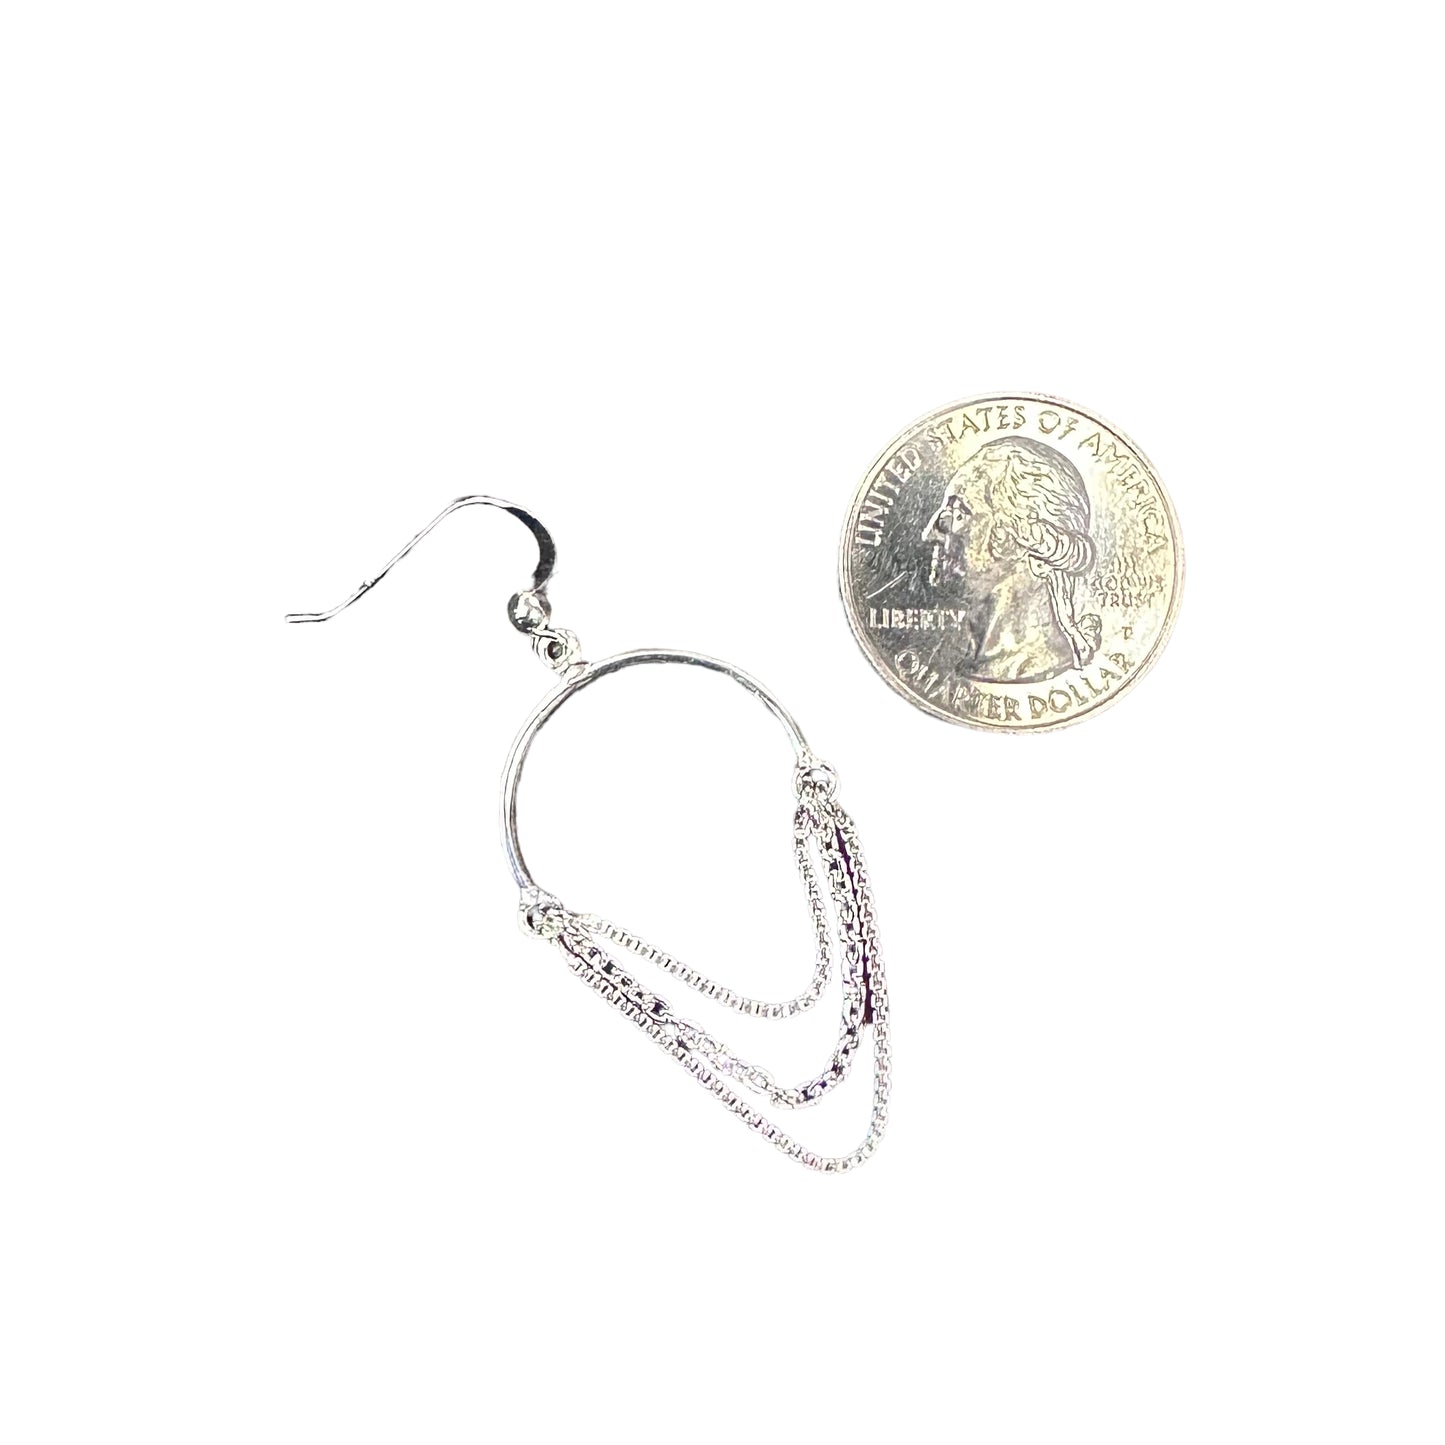 3-Strand Chain Hoop Dangle Earrings Sterling Silver